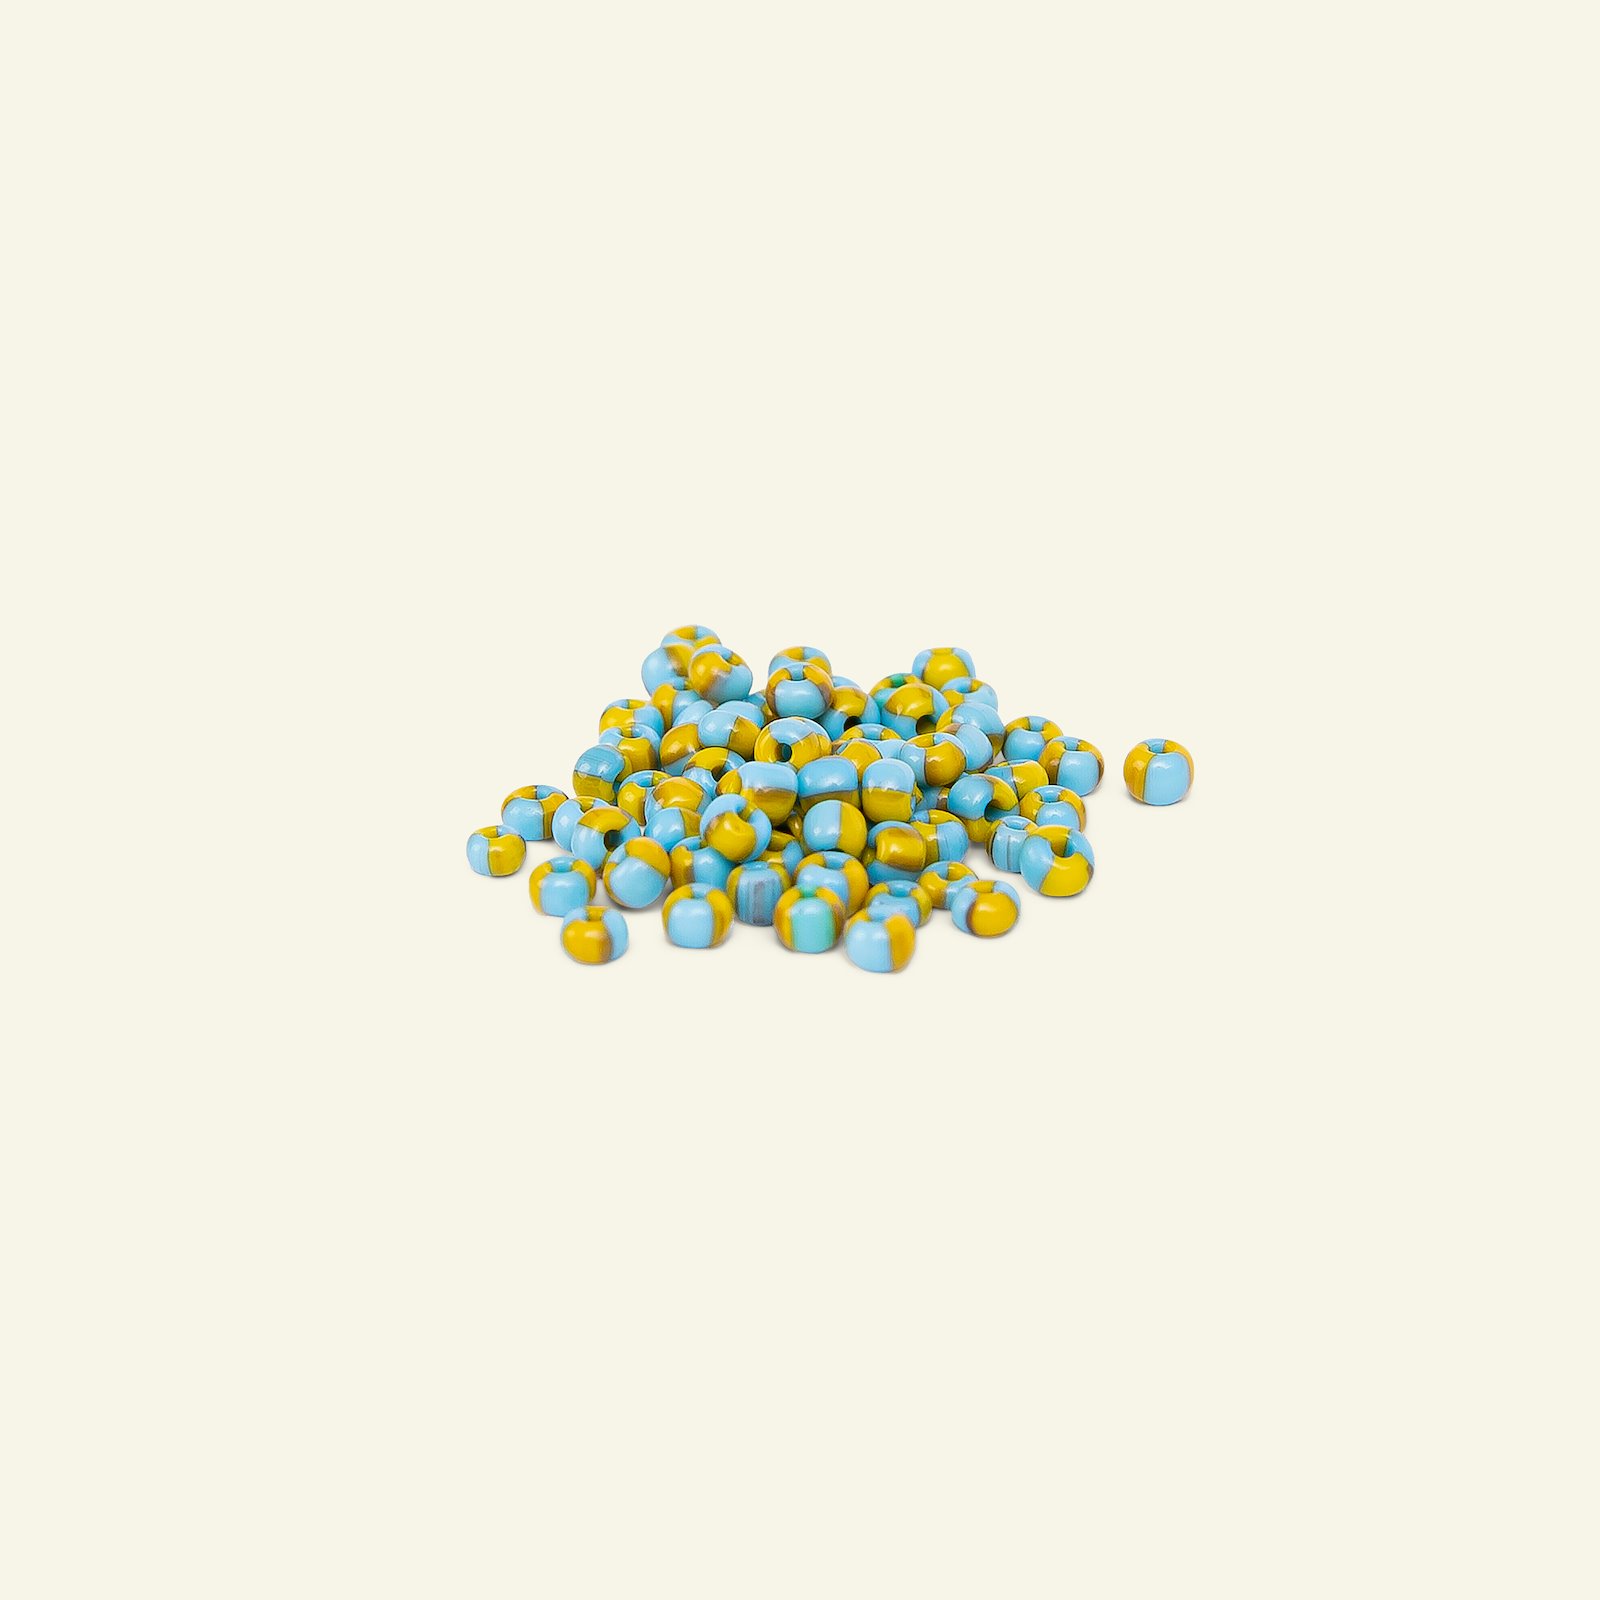 Matsuno glaspärla 8/0 gul/blå randig 10g 47132_pack_b